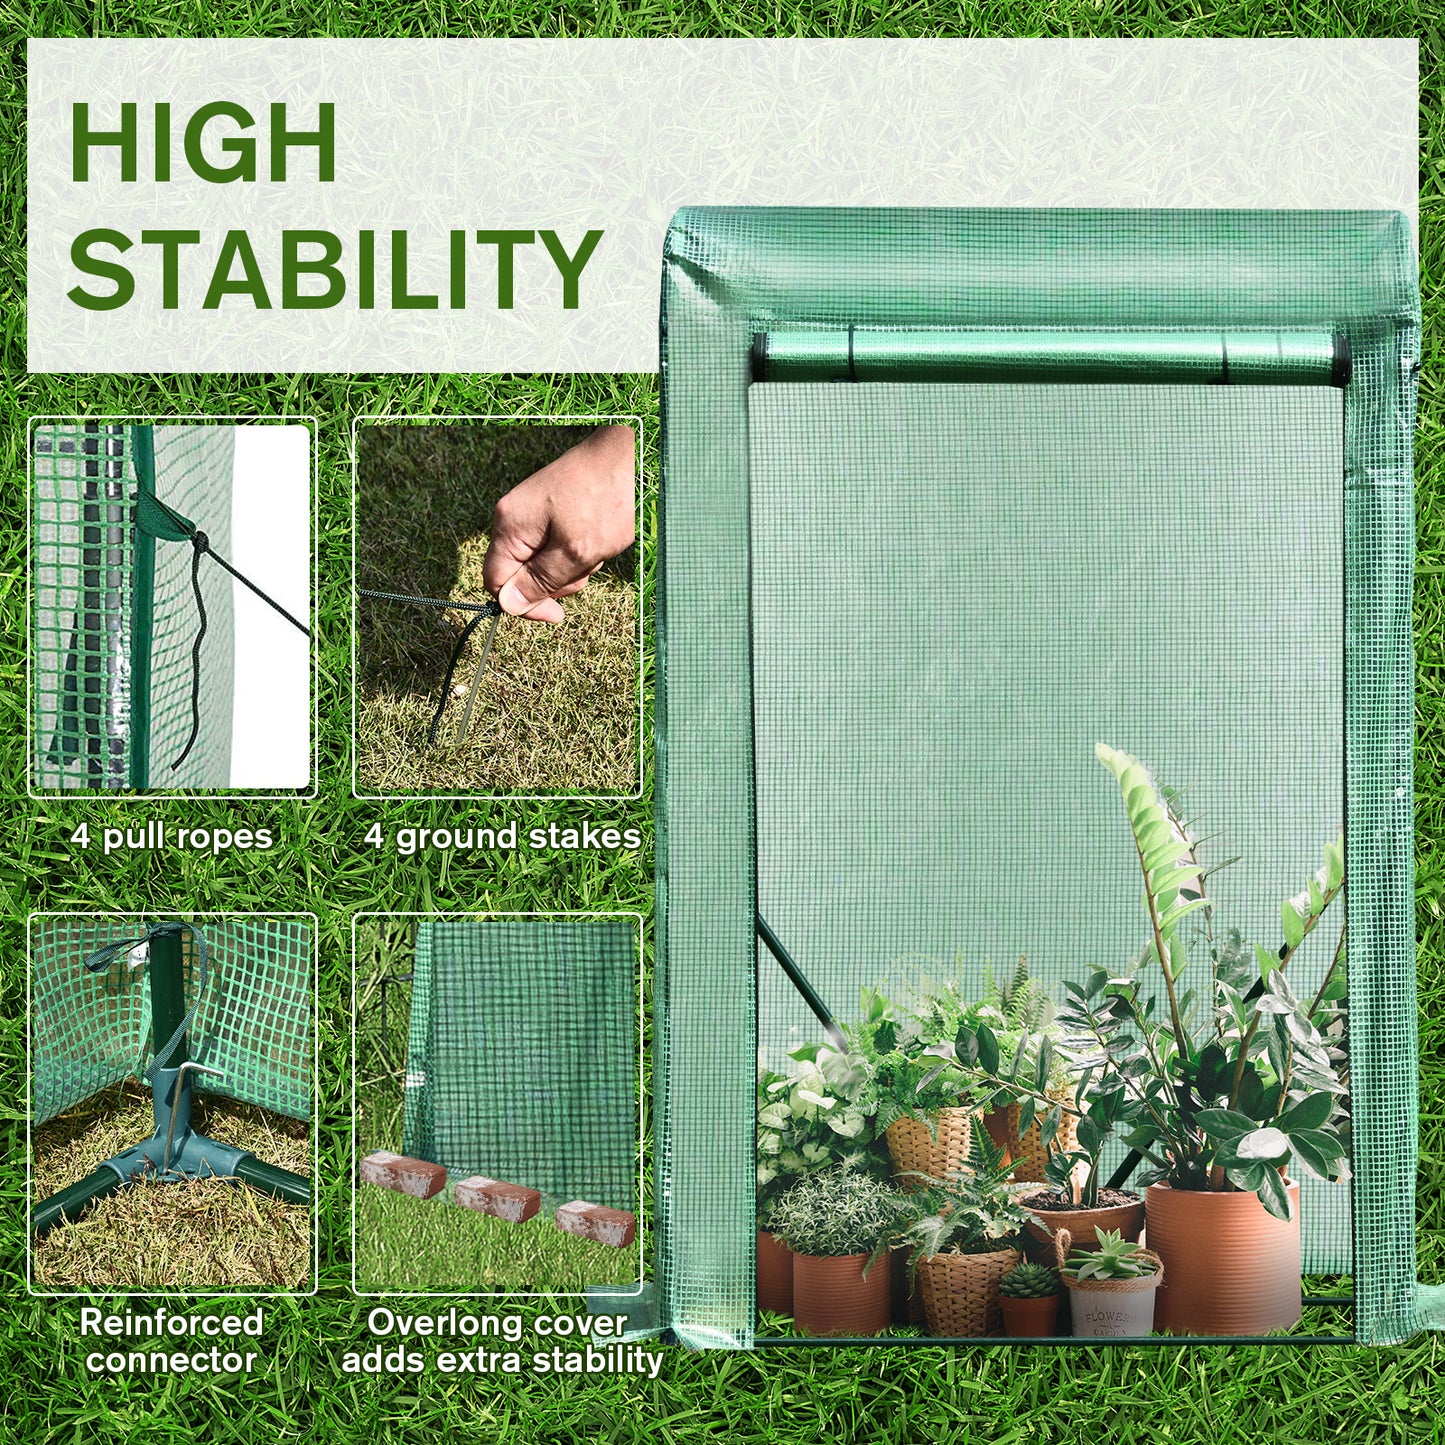 Outsunny Greenhouse Sanctuary: Zipper-Entry Plant Shelter for Verdant Nurturing, 100L x 50W x 150H cm, Emerald Green